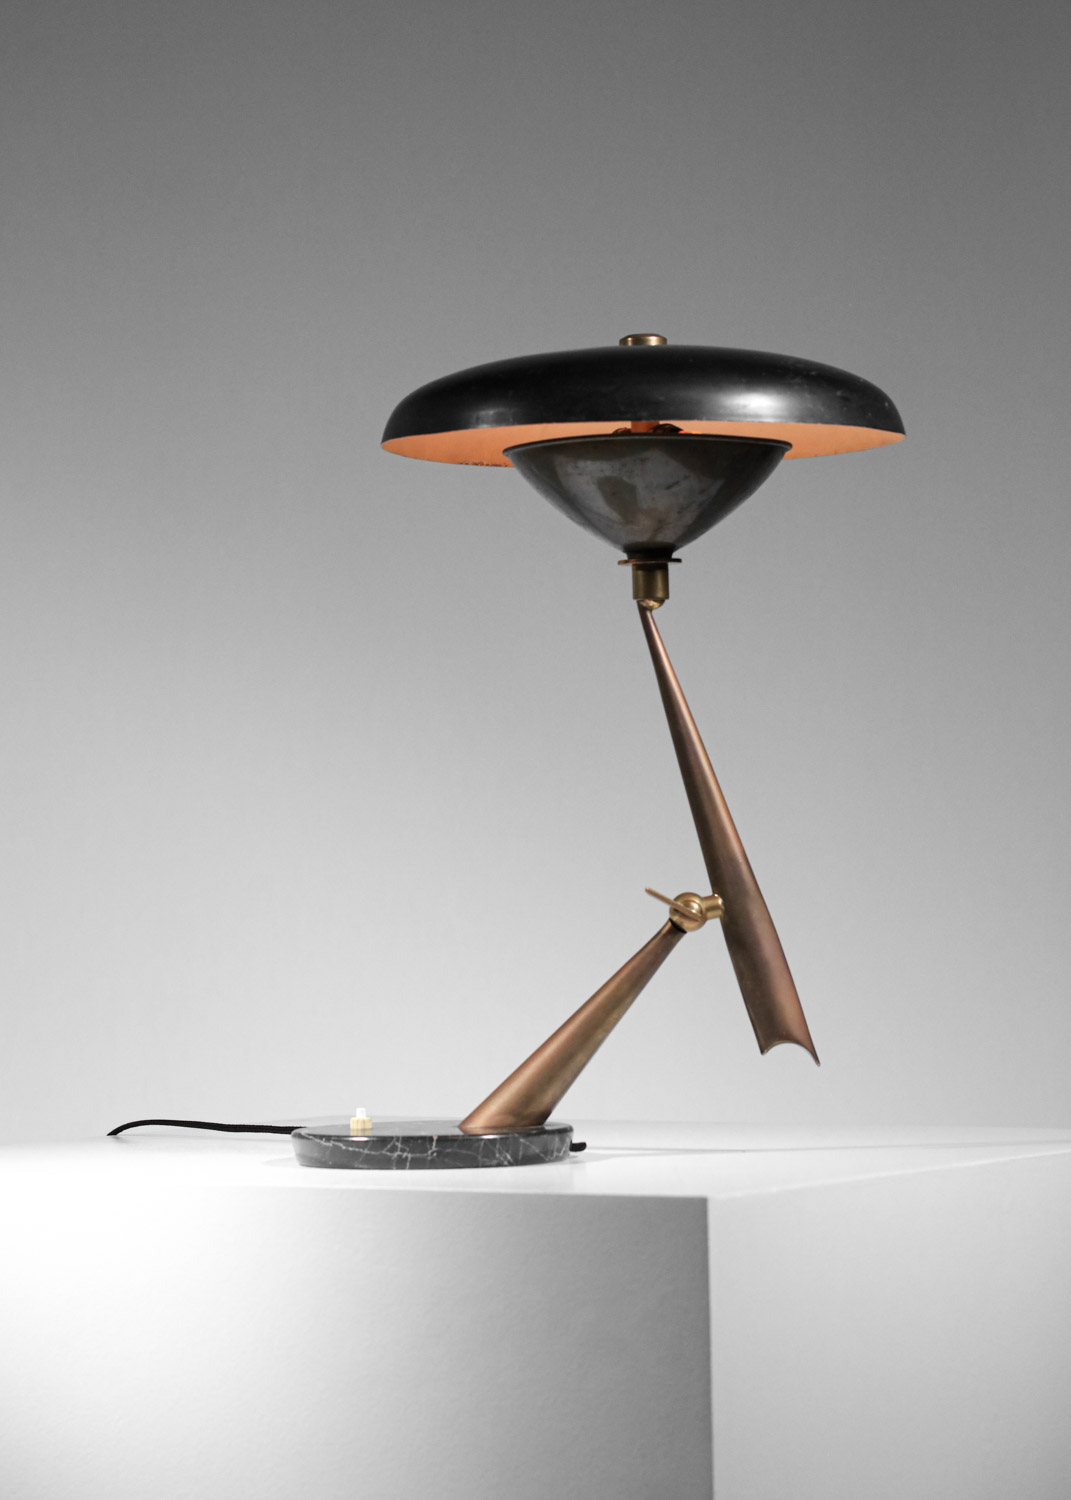 Observatory Vaccinere lav lektier Italian table lamp 50's attr. to Lumen 60's style Arredoluce Stillux – H130  – Danke Galerie